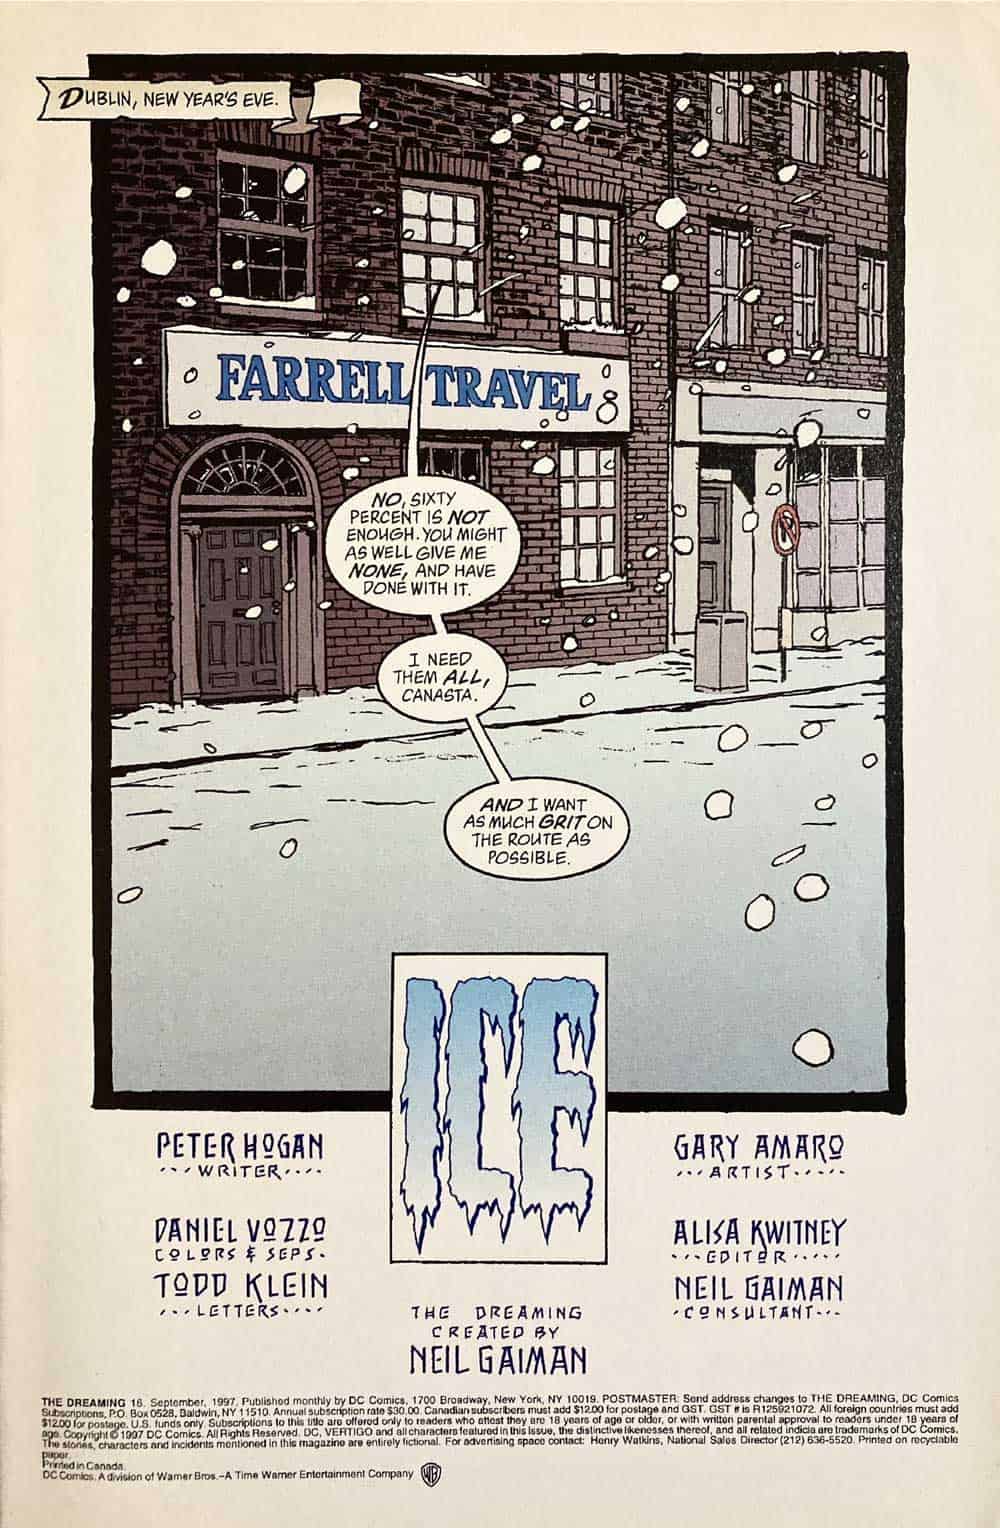 Neil Gaiman comic book illustration, ICE